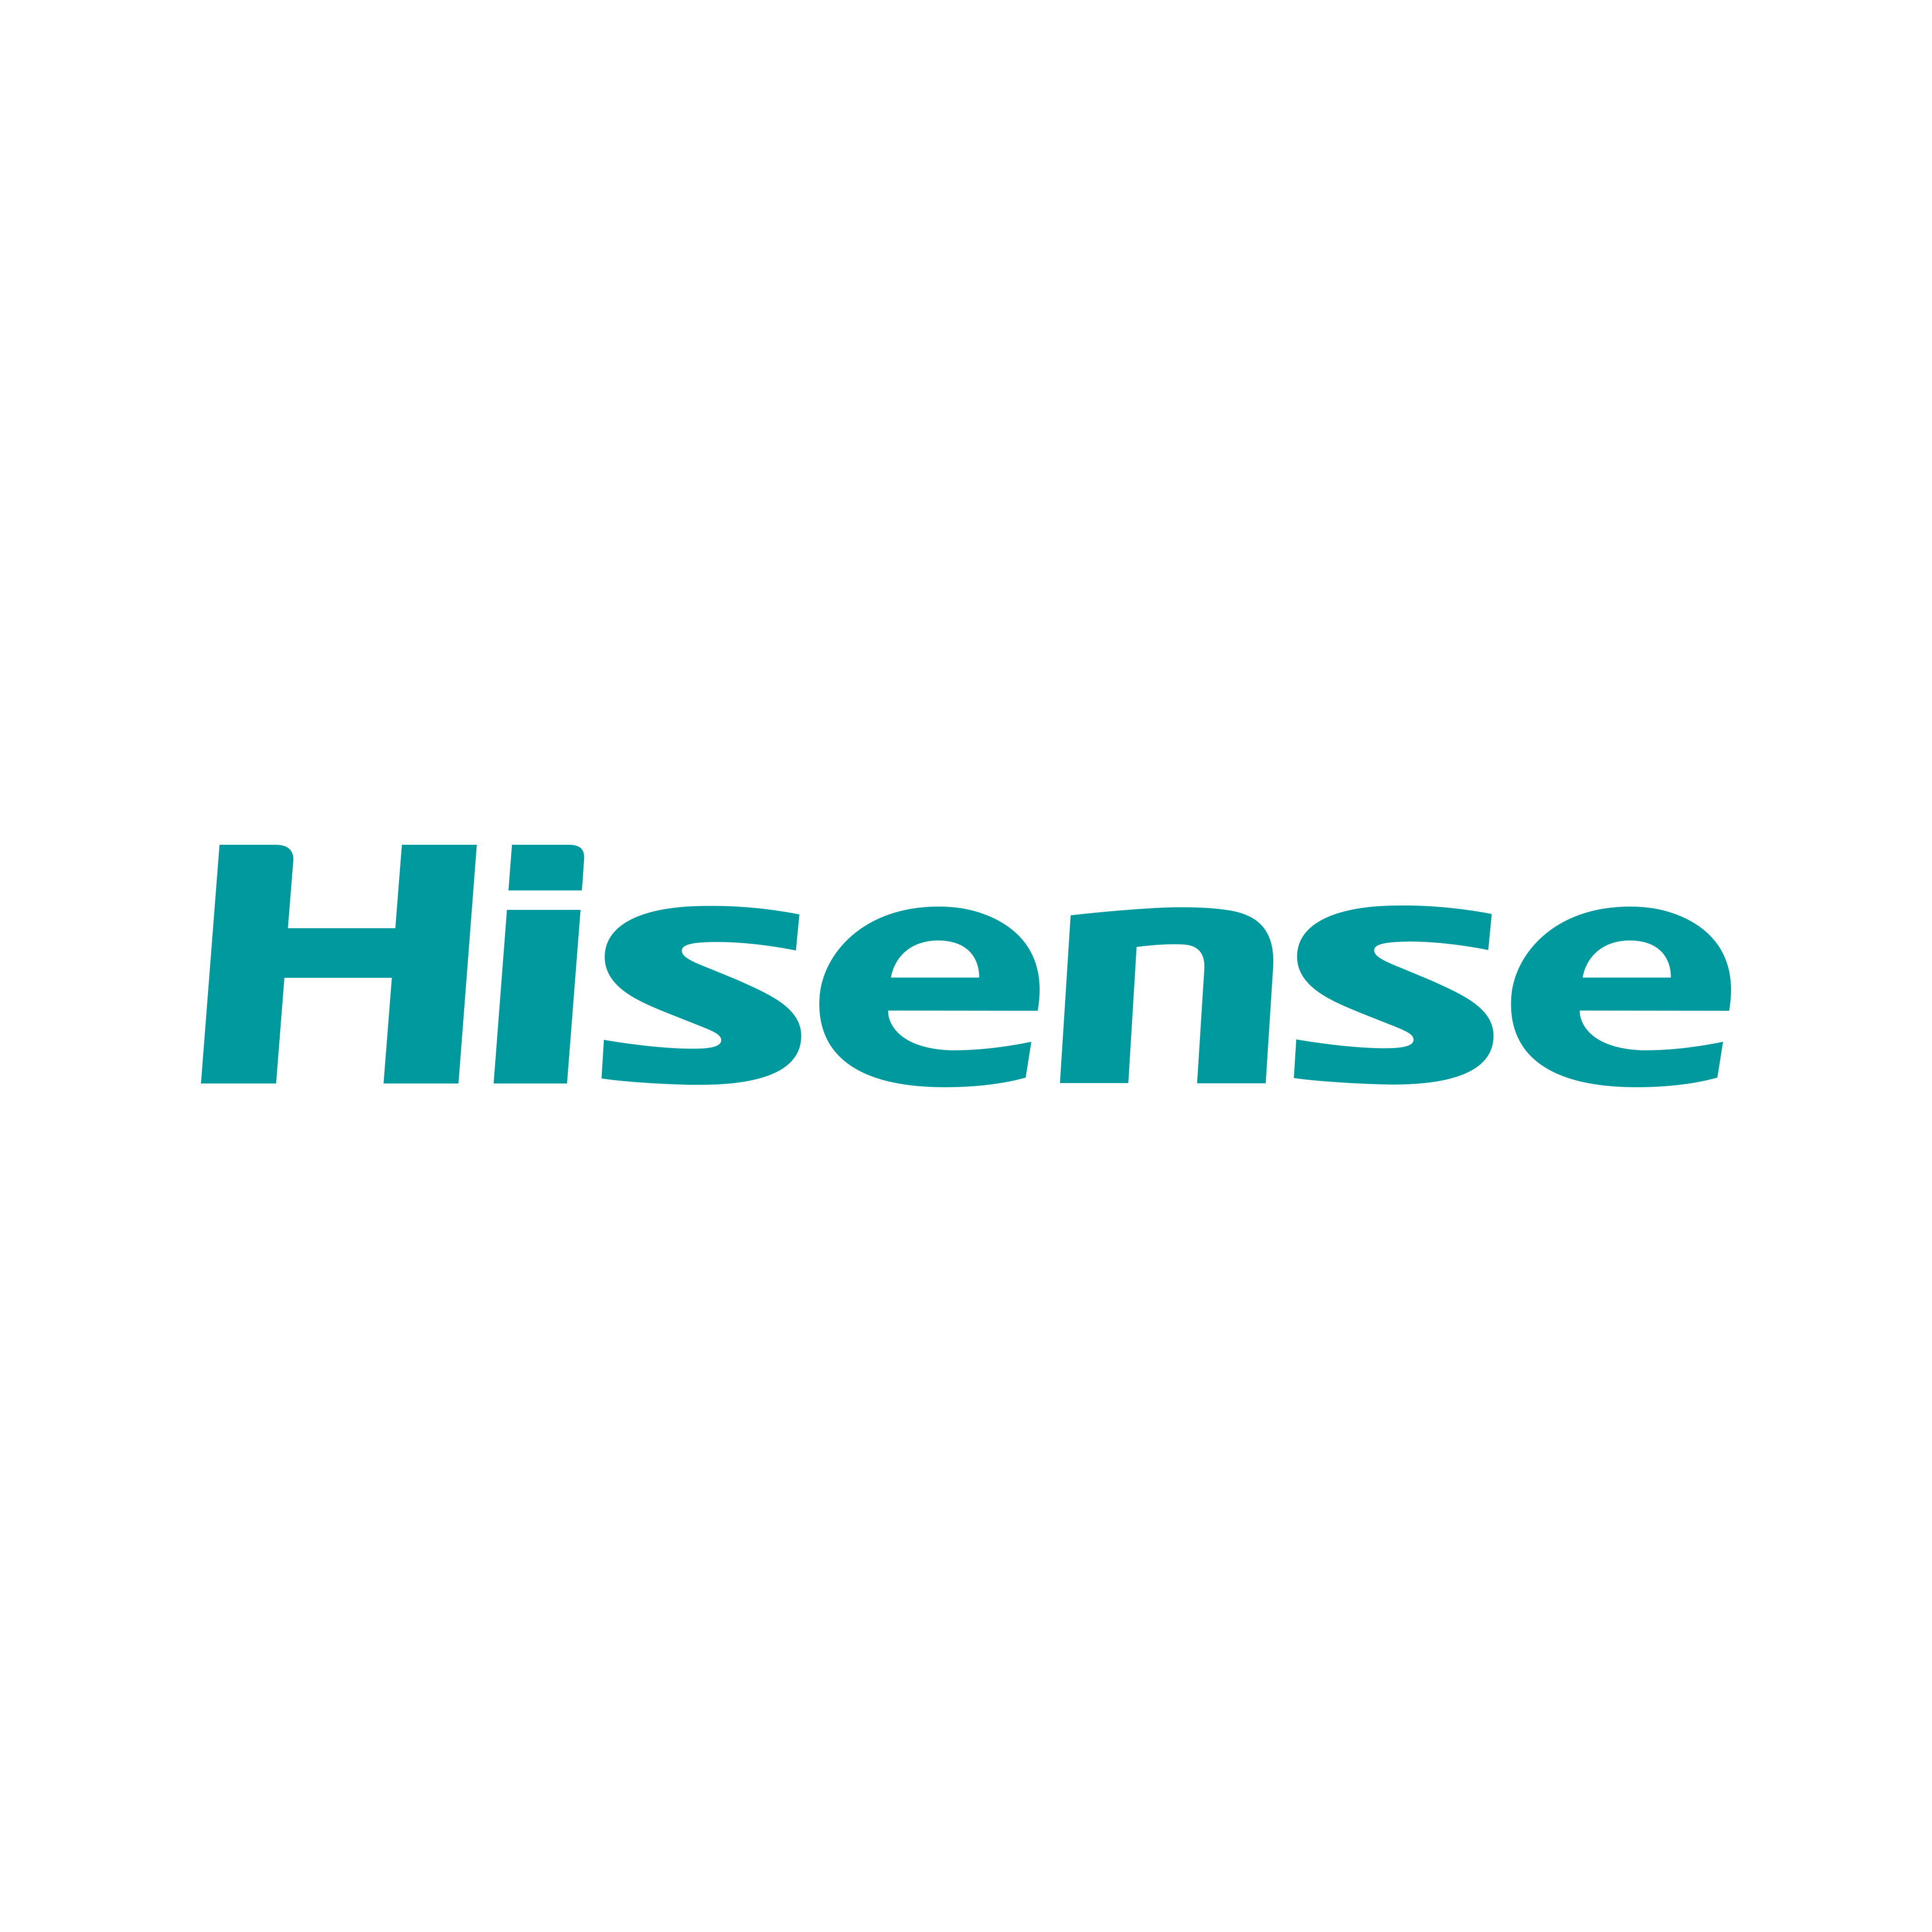 hisense logo 0 - Hisense Logo